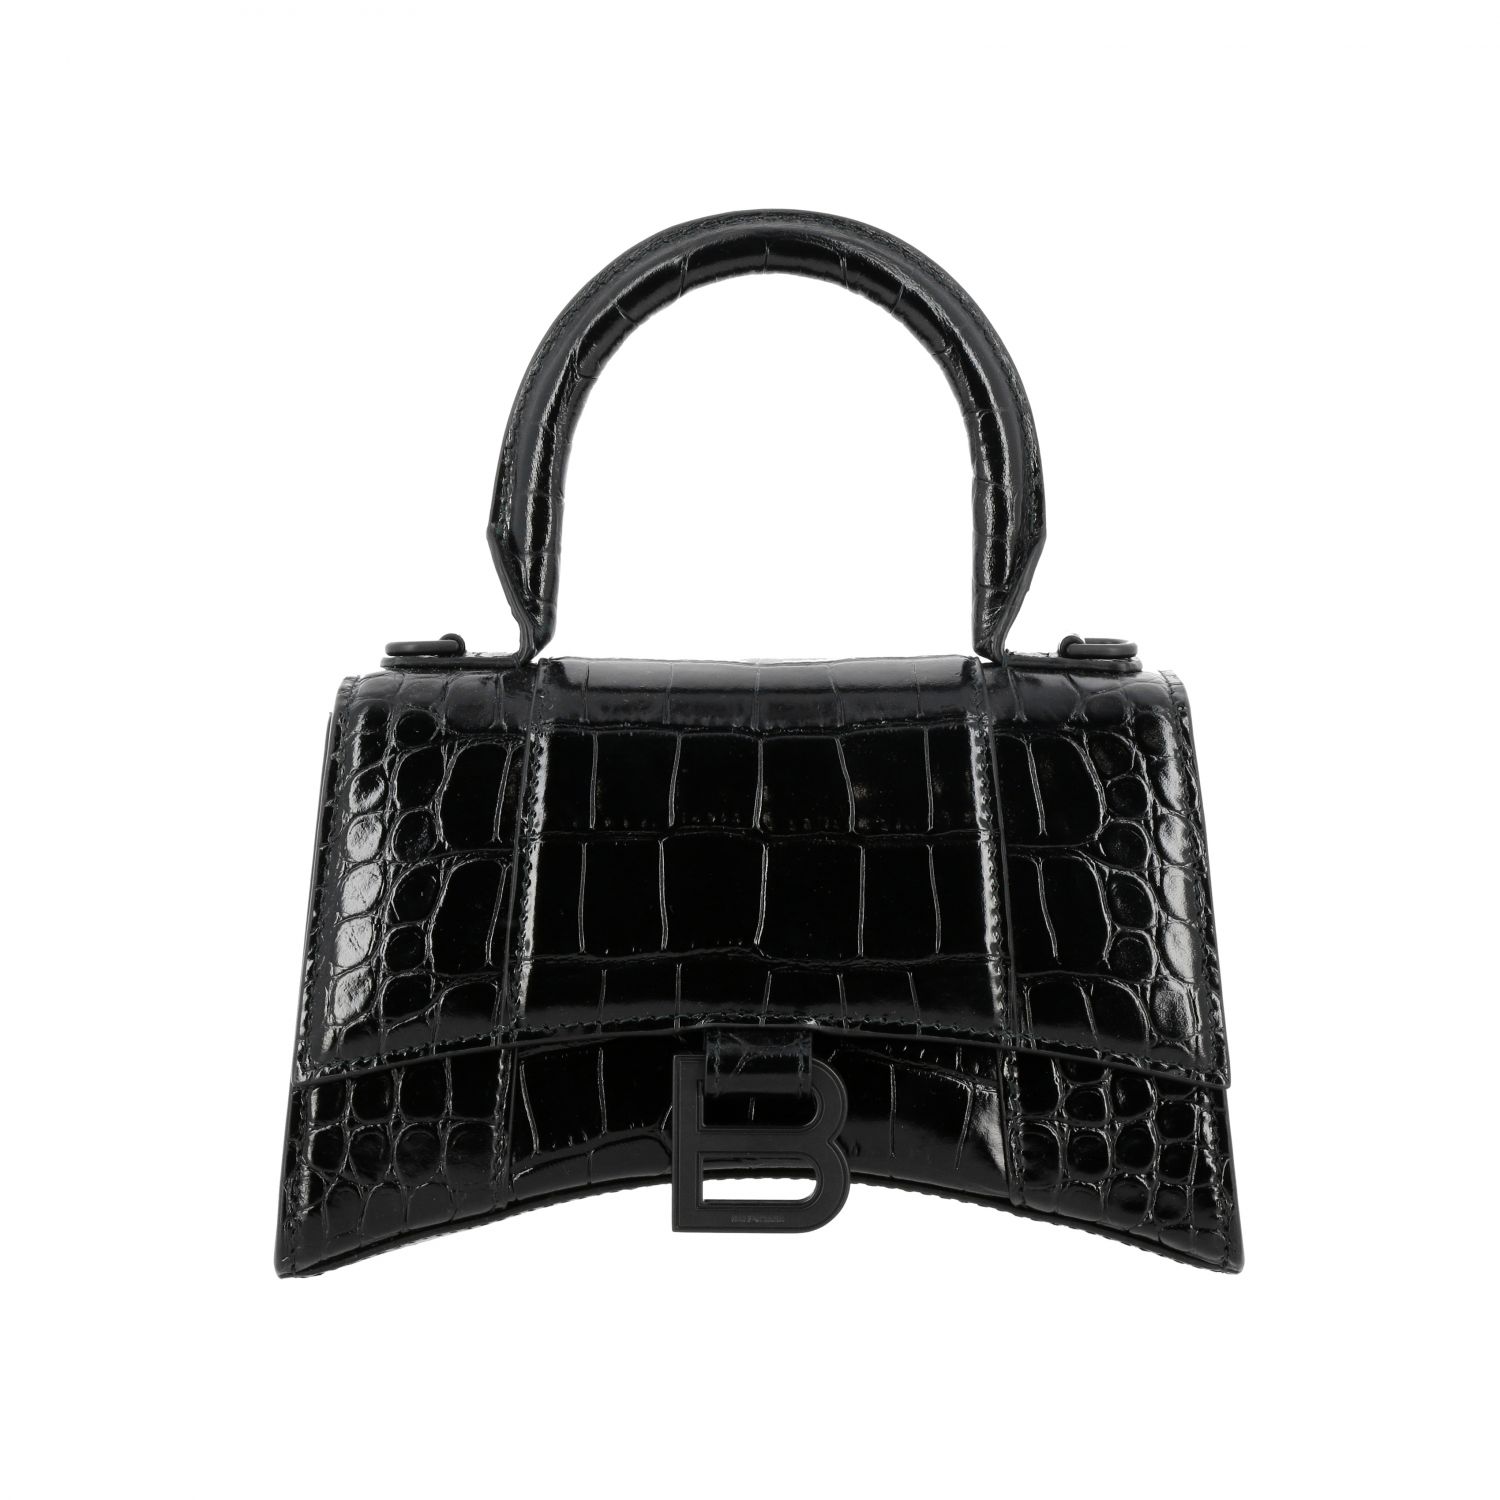 BALENCIAGA: Shoulder bag women | Handbag Balenciaga Women Black | Handbag Balenciaga 592833 